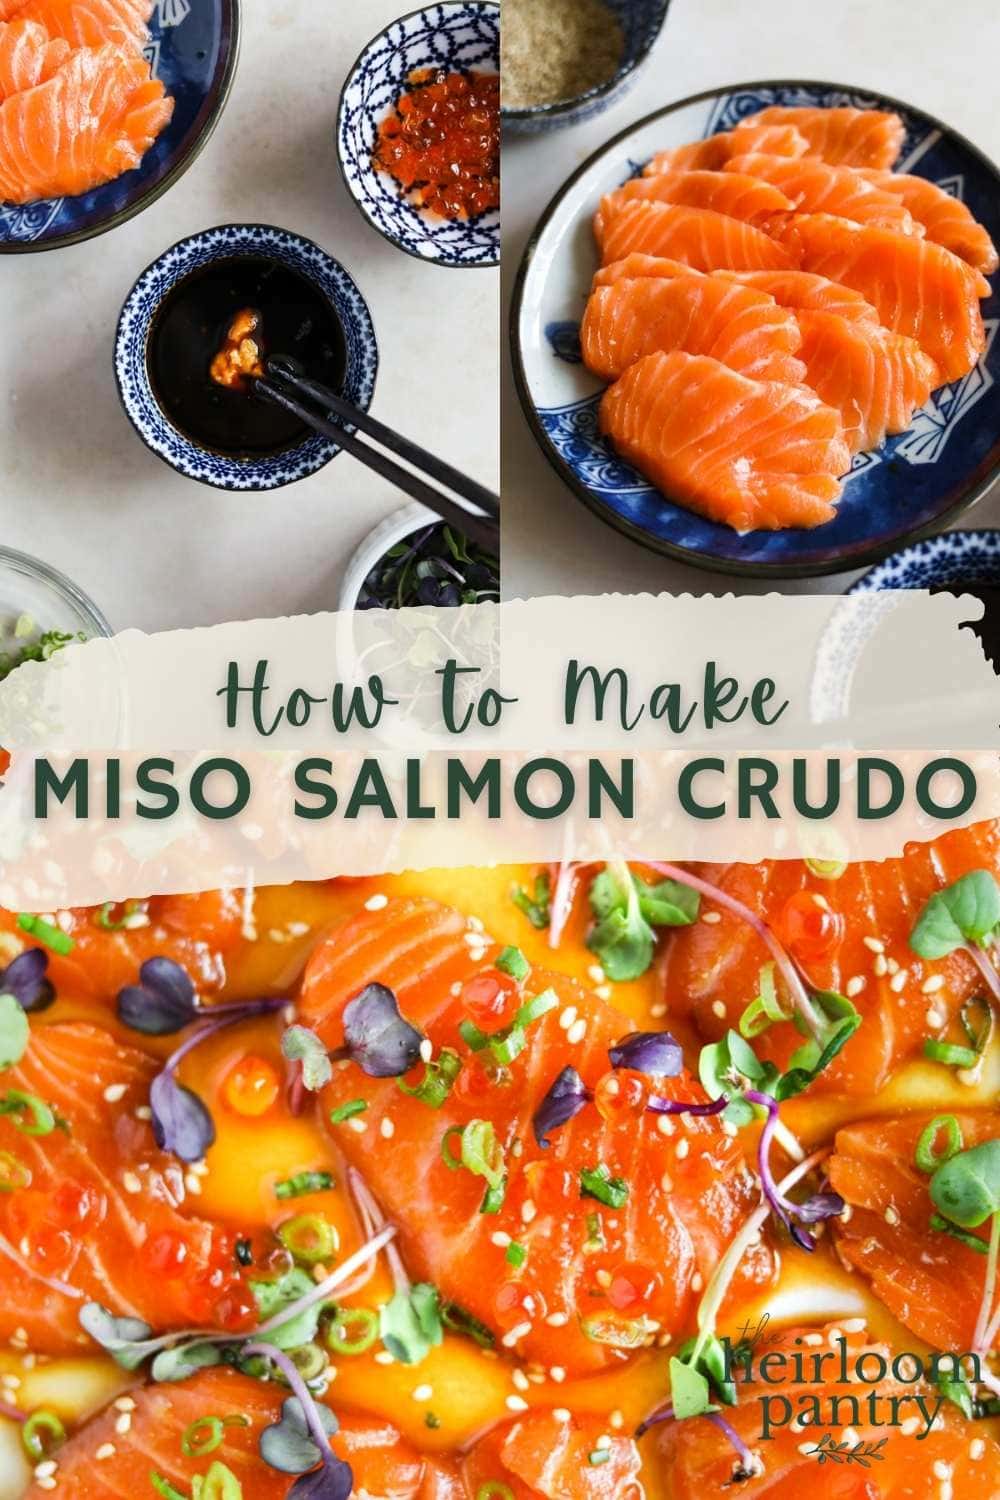 Miso salmon crudo/carpaccio Pinterest pin.